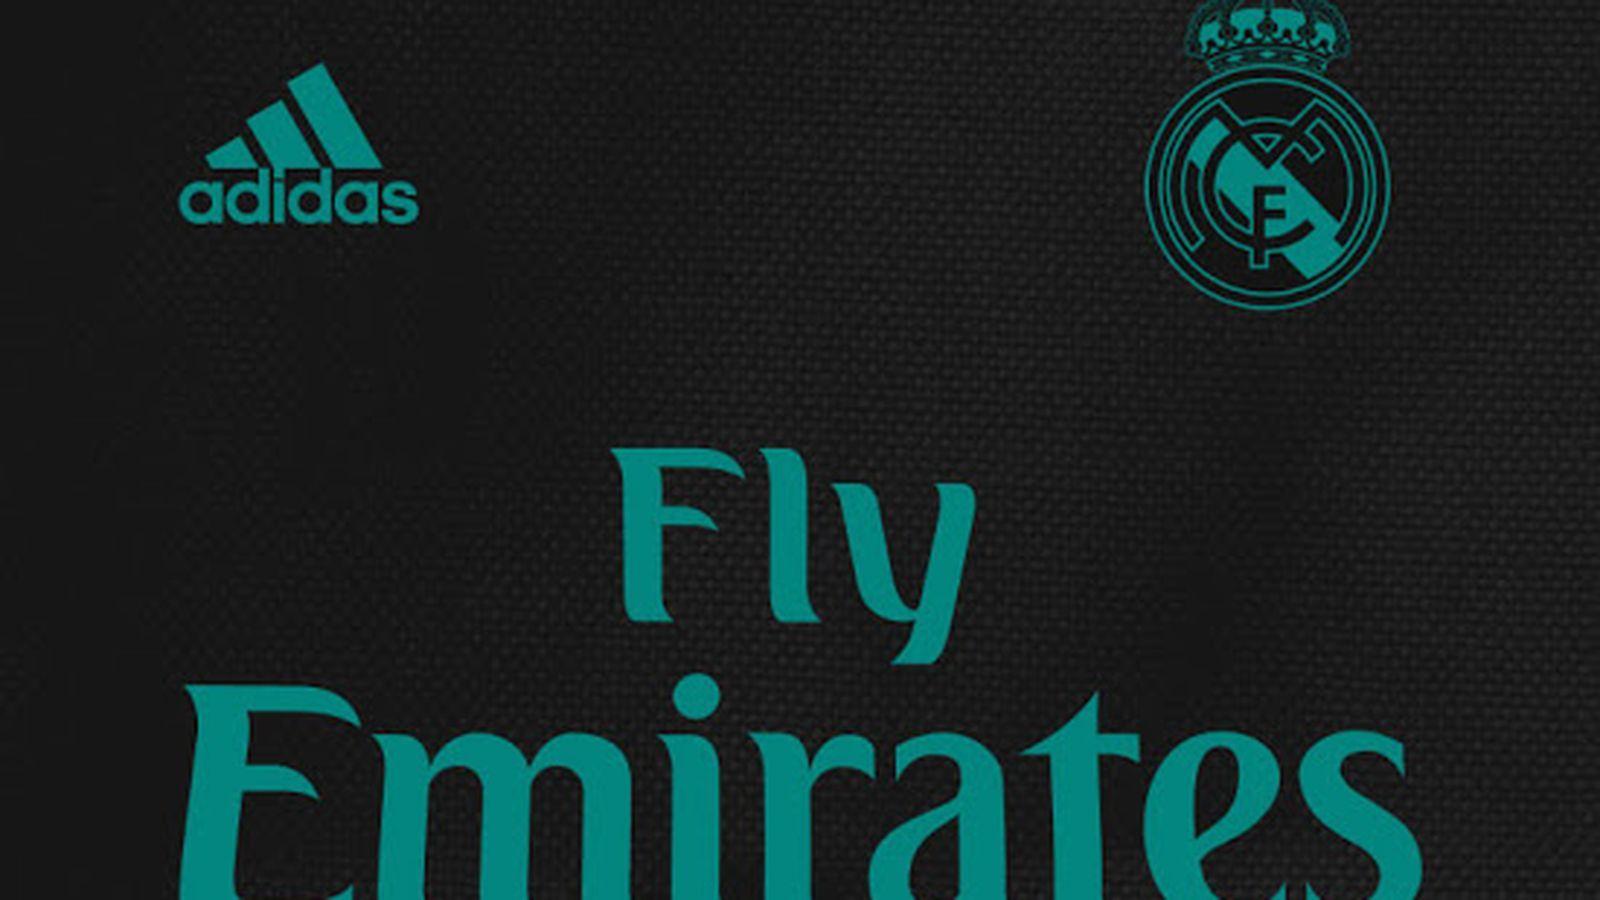 Adidas Real Madrid Logo - Real Madrid's 2017-2018 away kit leaked? - Managing Madrid